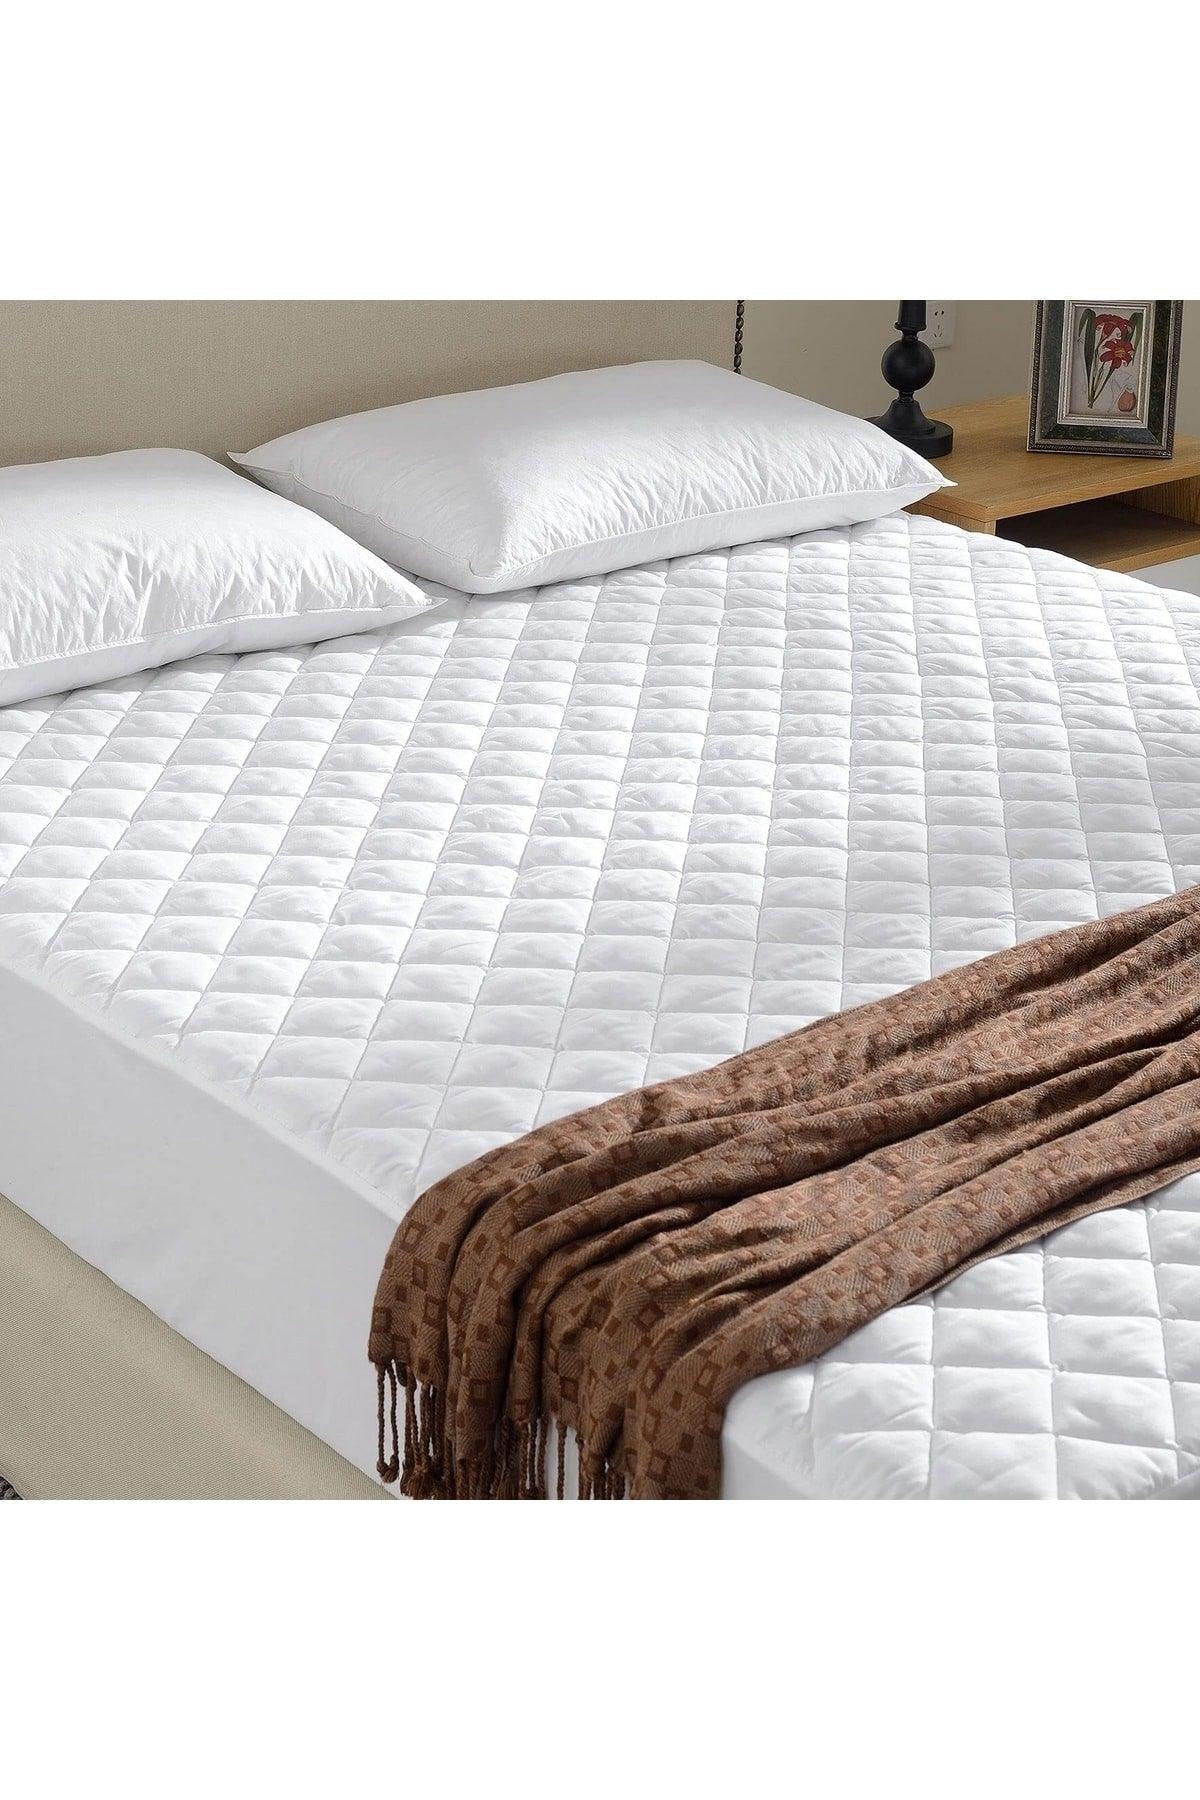 100% Cotton Quilted Mattress Protector Mattress Bed Sheet - Swordslife